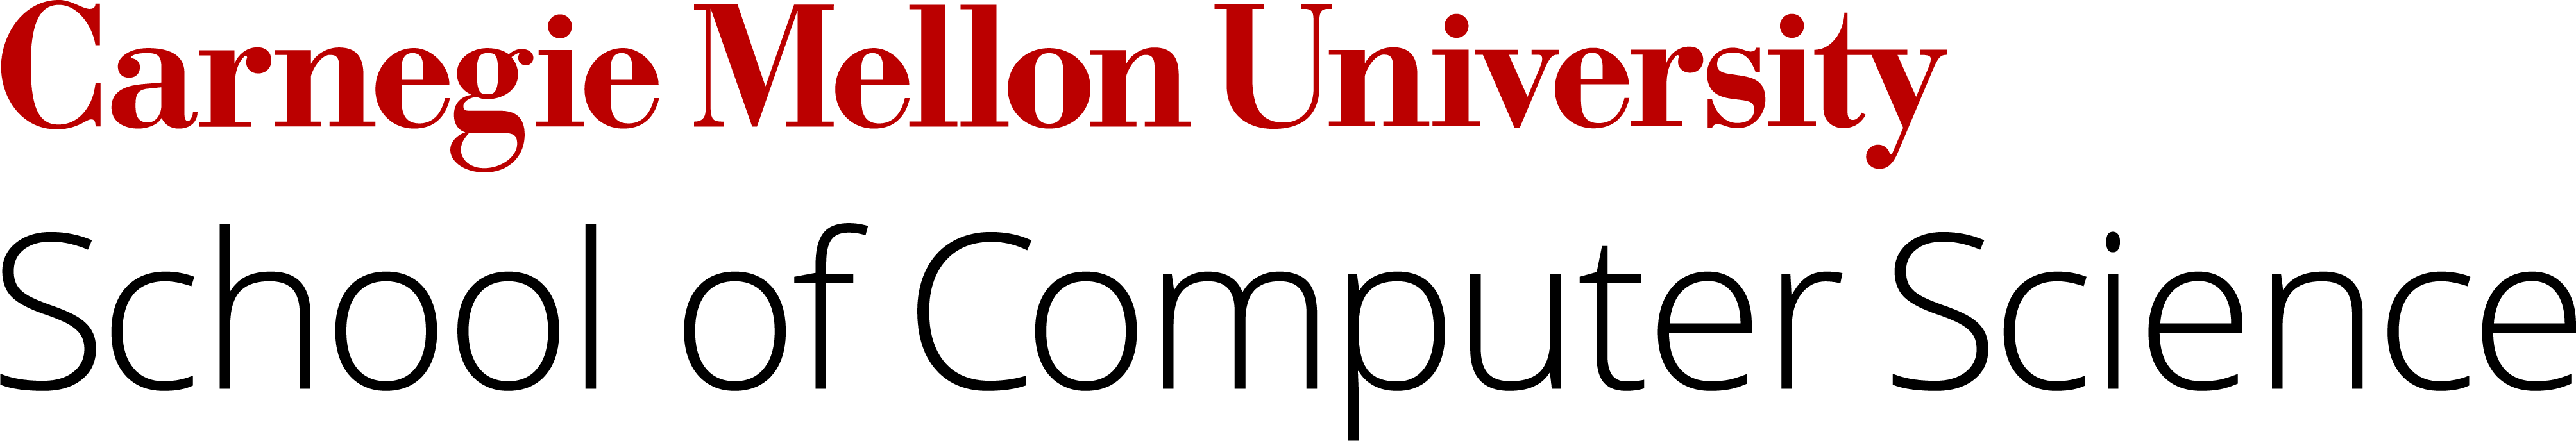 CMU School of Computer Science logo